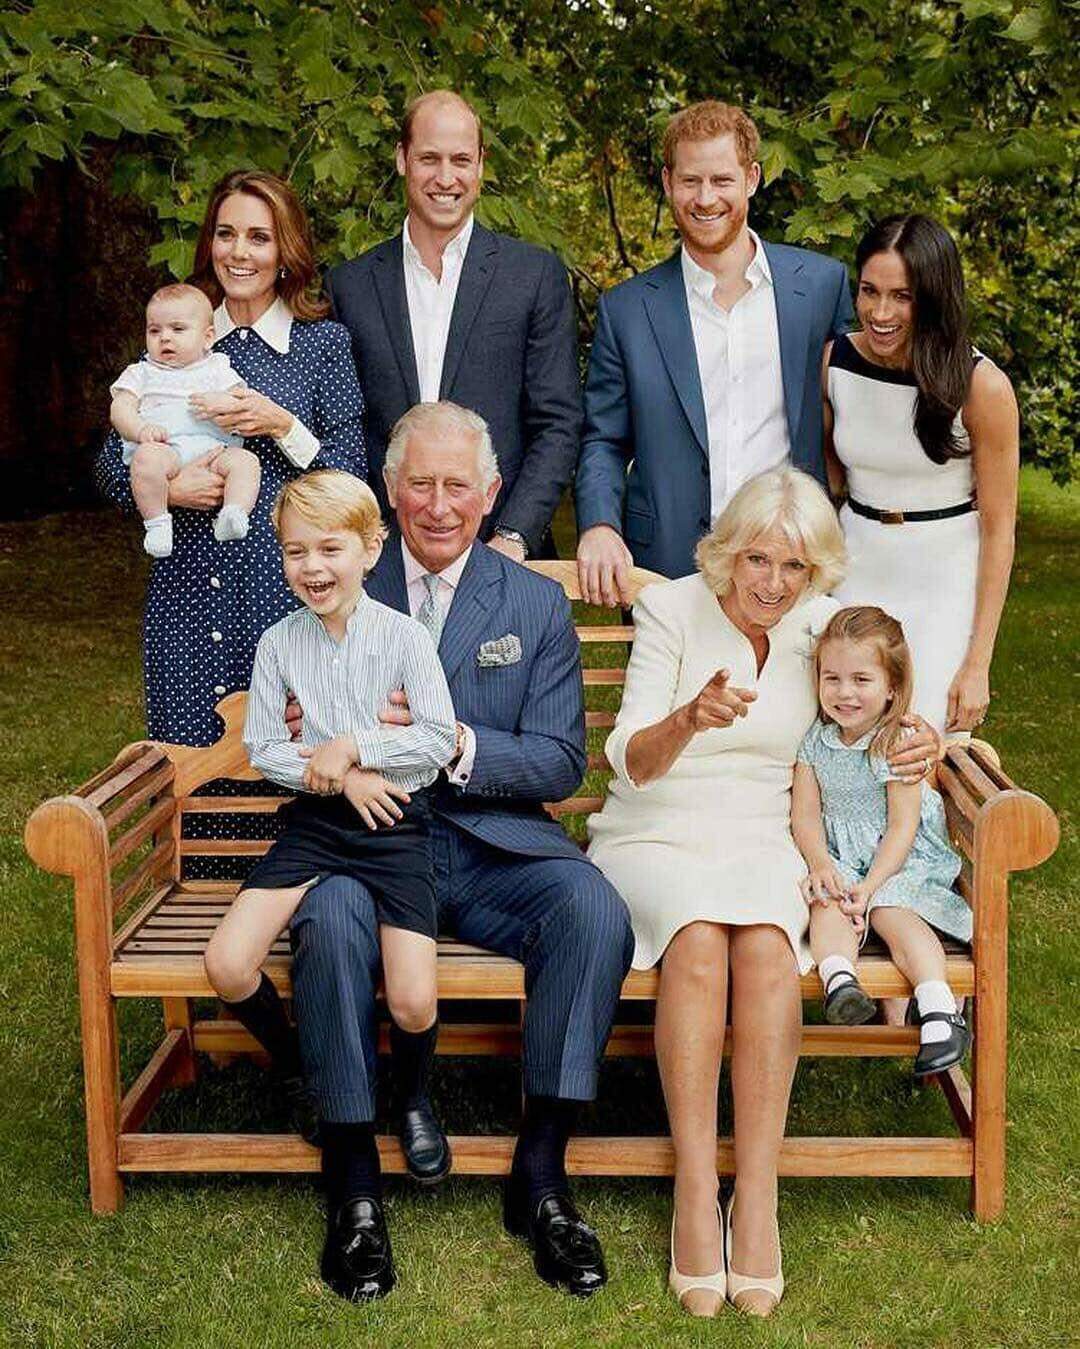 Príncipe Charles comemora 70 anos hoje